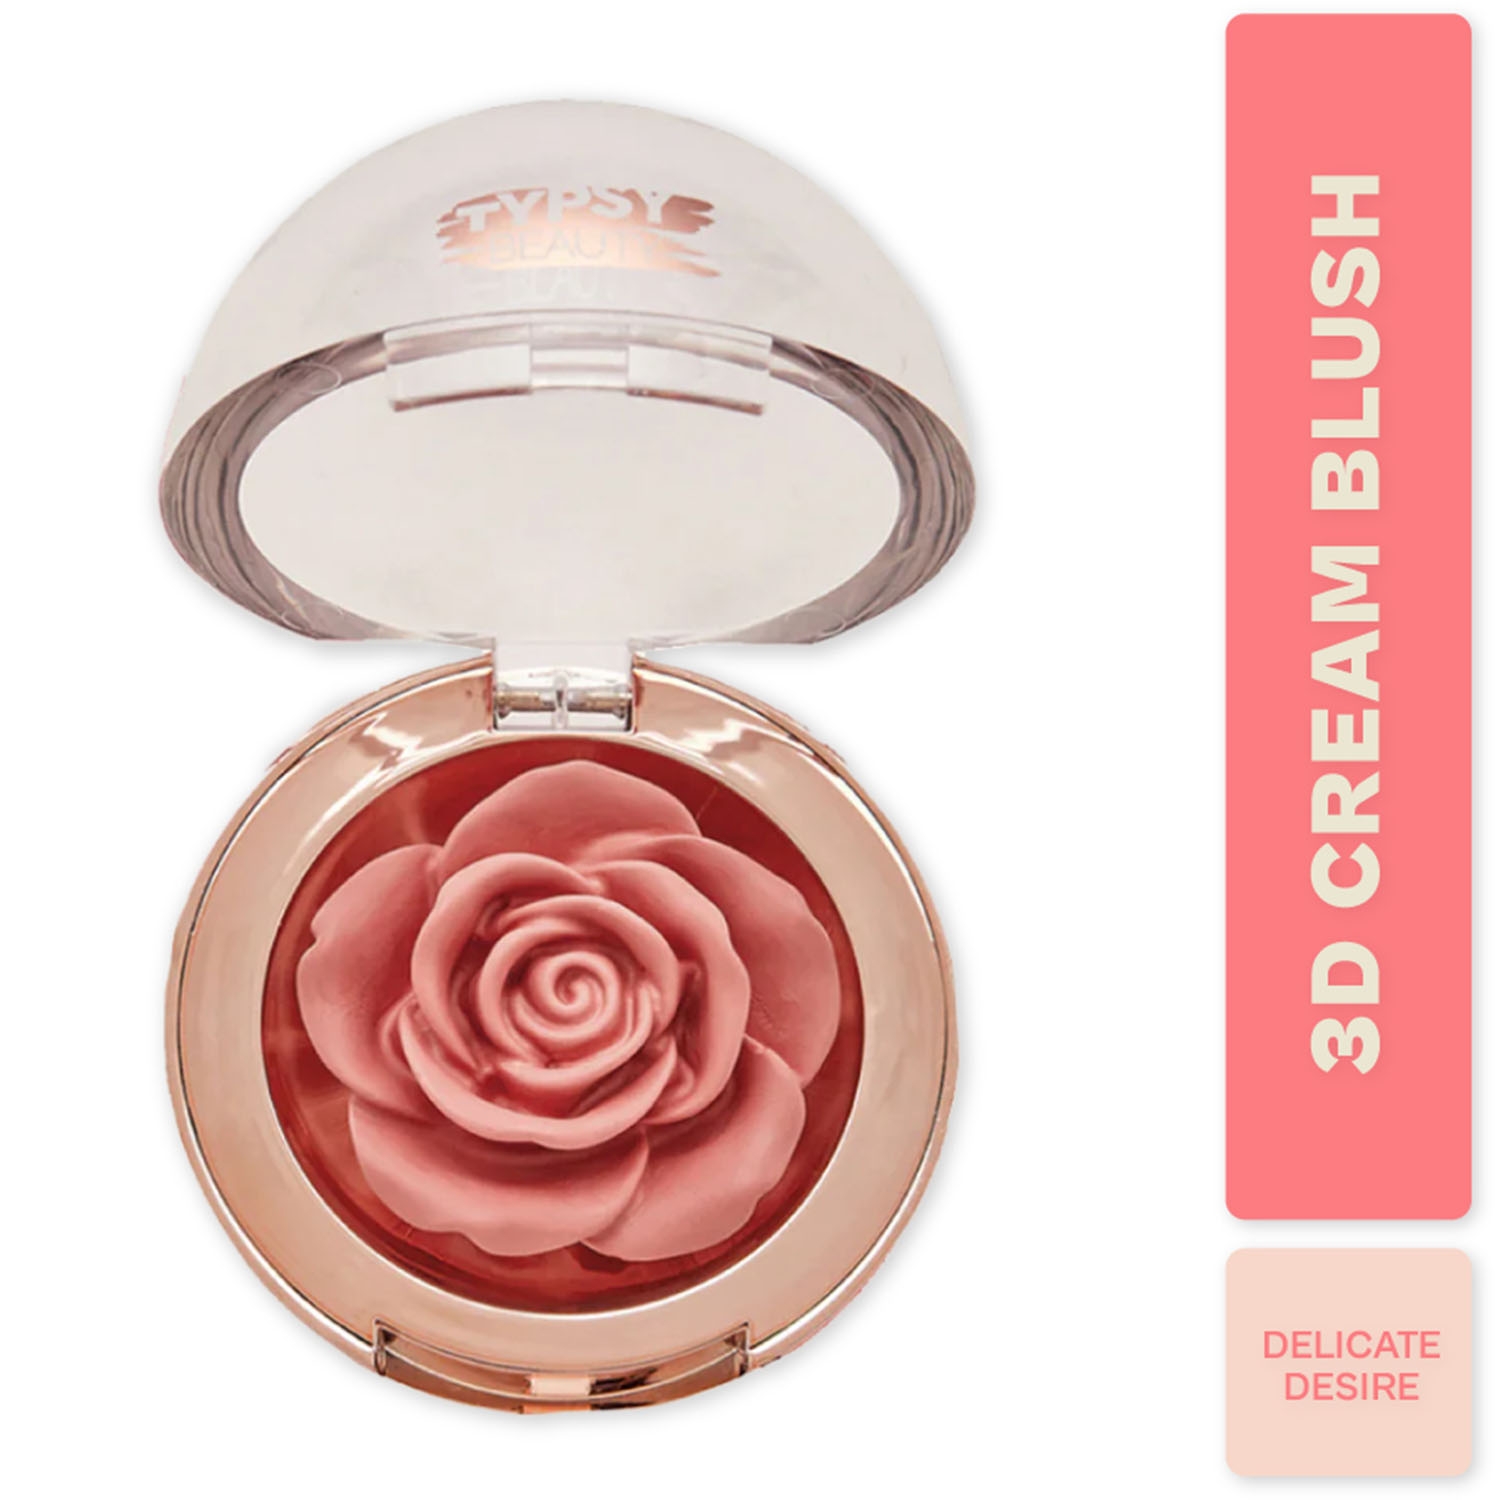 Typsy Beauty | Typsy Beauty Enchanted Garden 3D Rose Blush - Delicate Desire (4.8g)